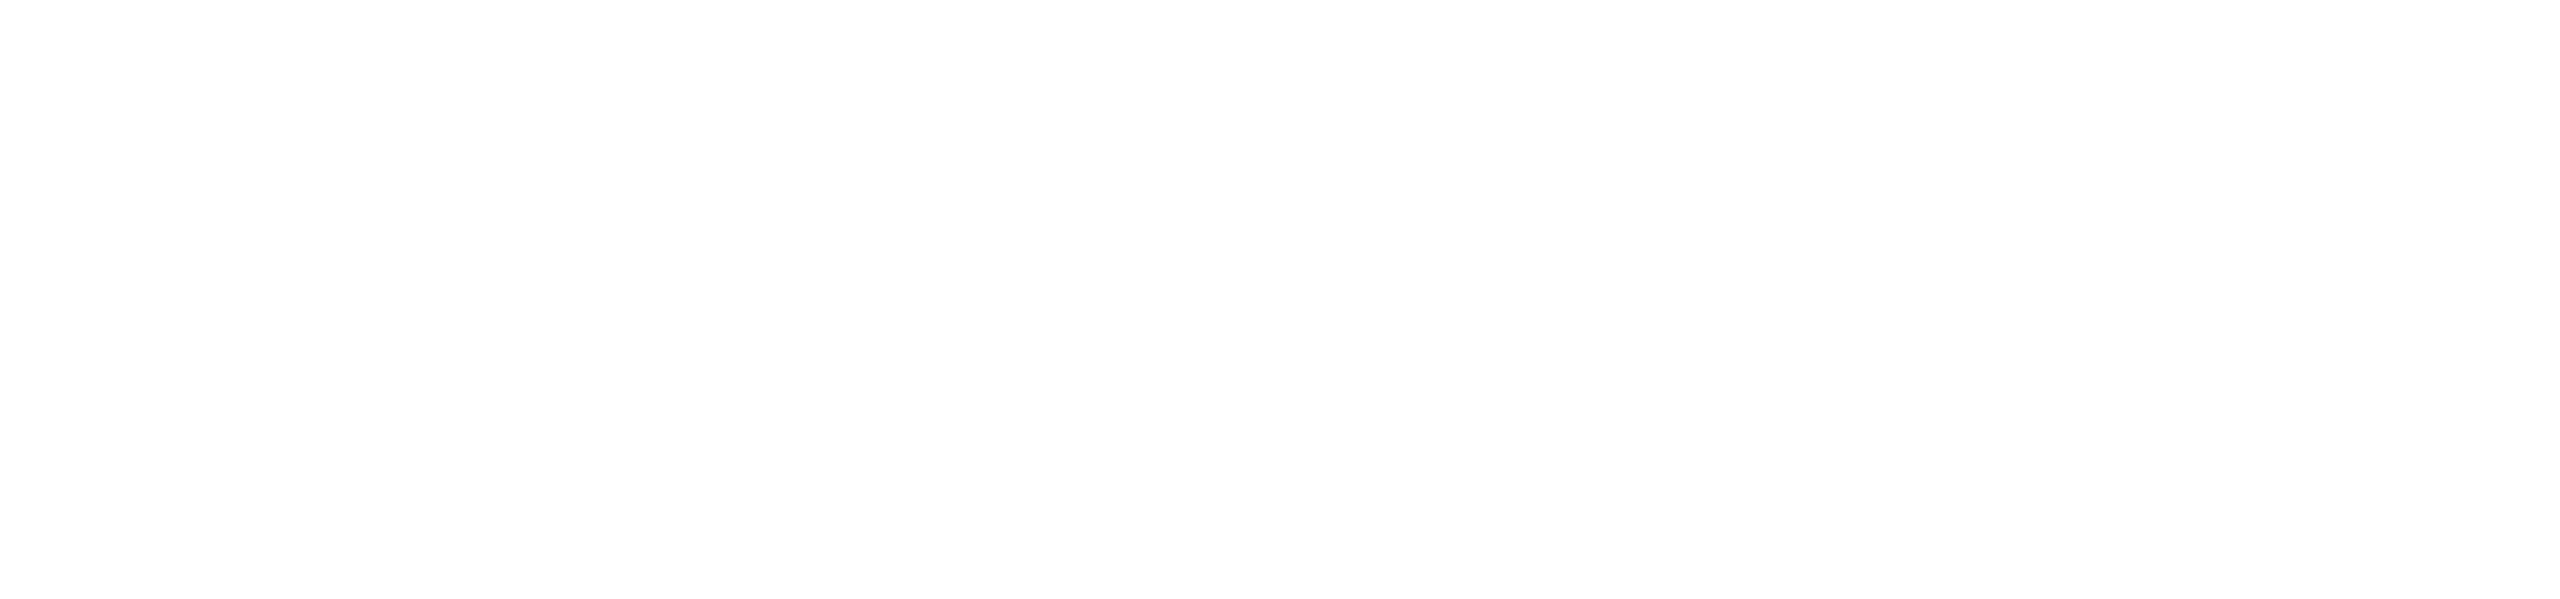 American Academy of Otolaryngology Head and Neck Surgery logo.